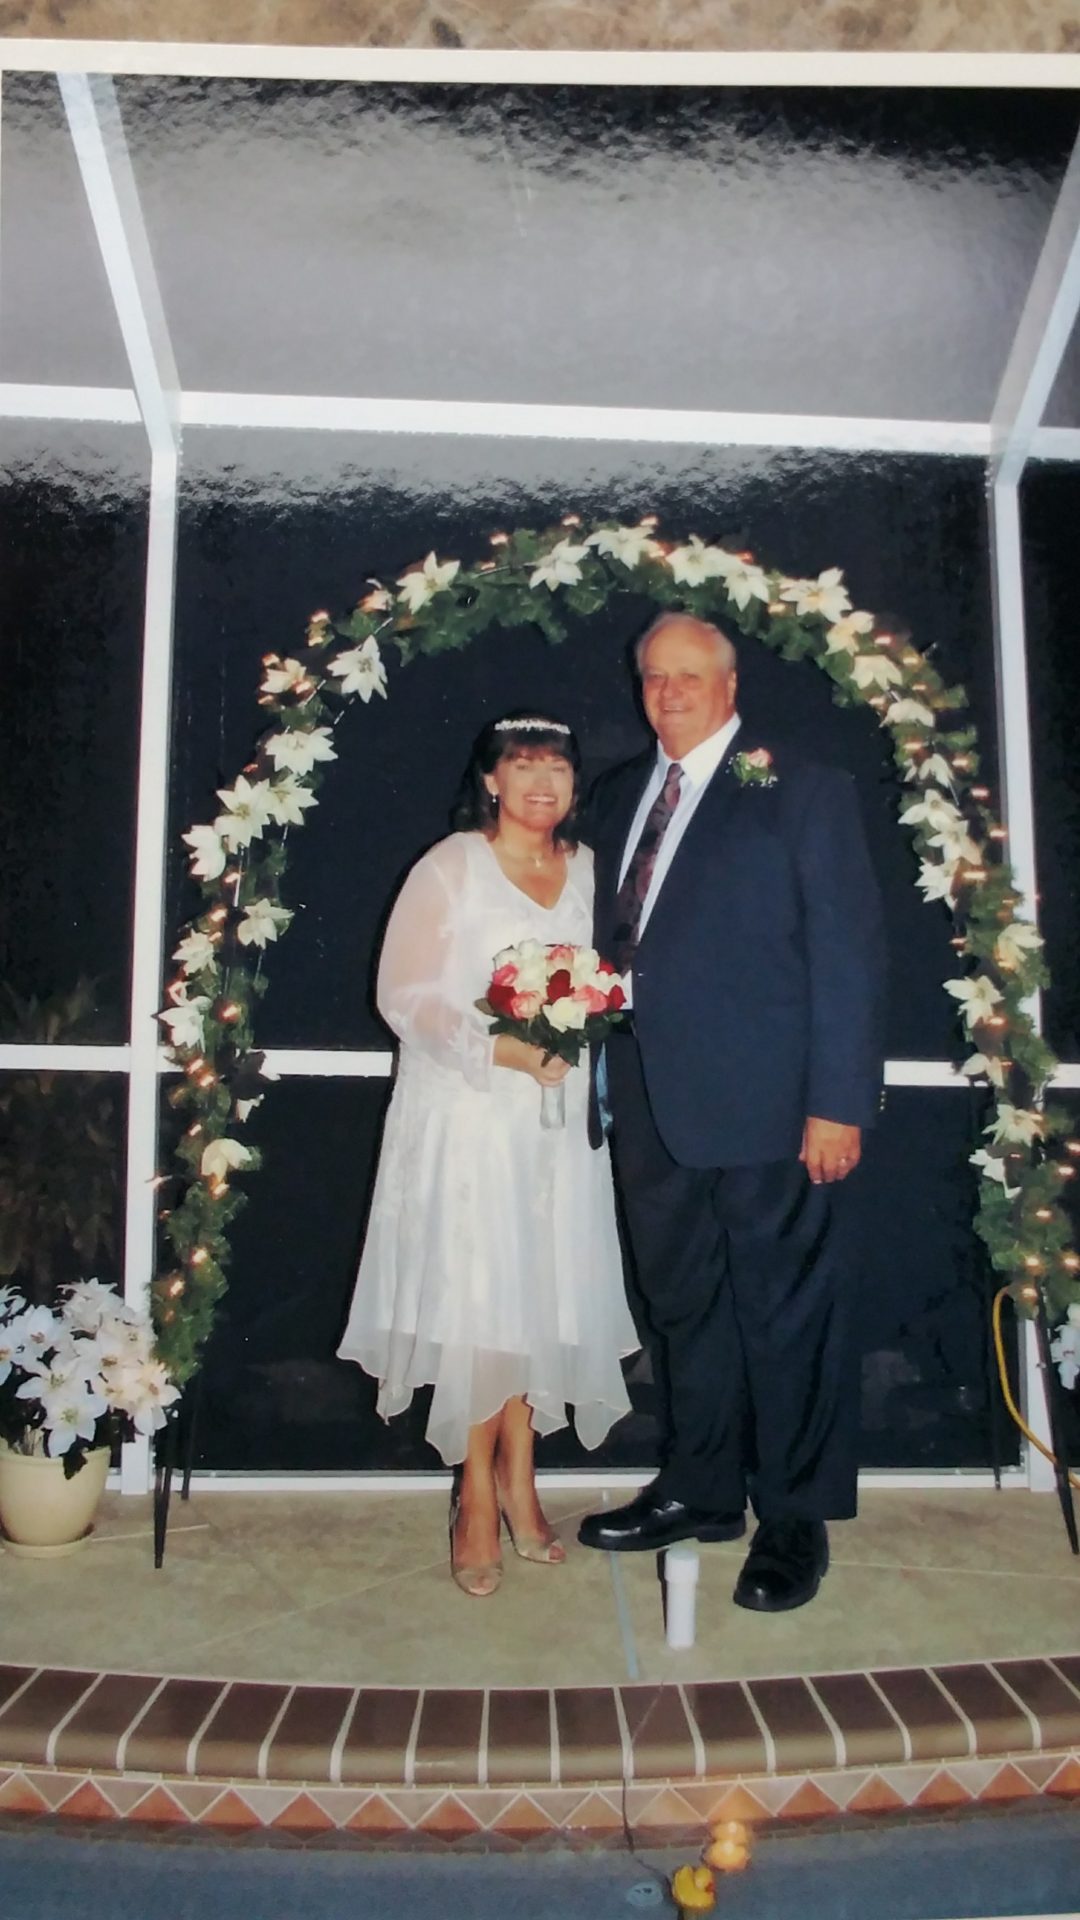 Bill & Karen's Wedding<br />
 January 1, 2006